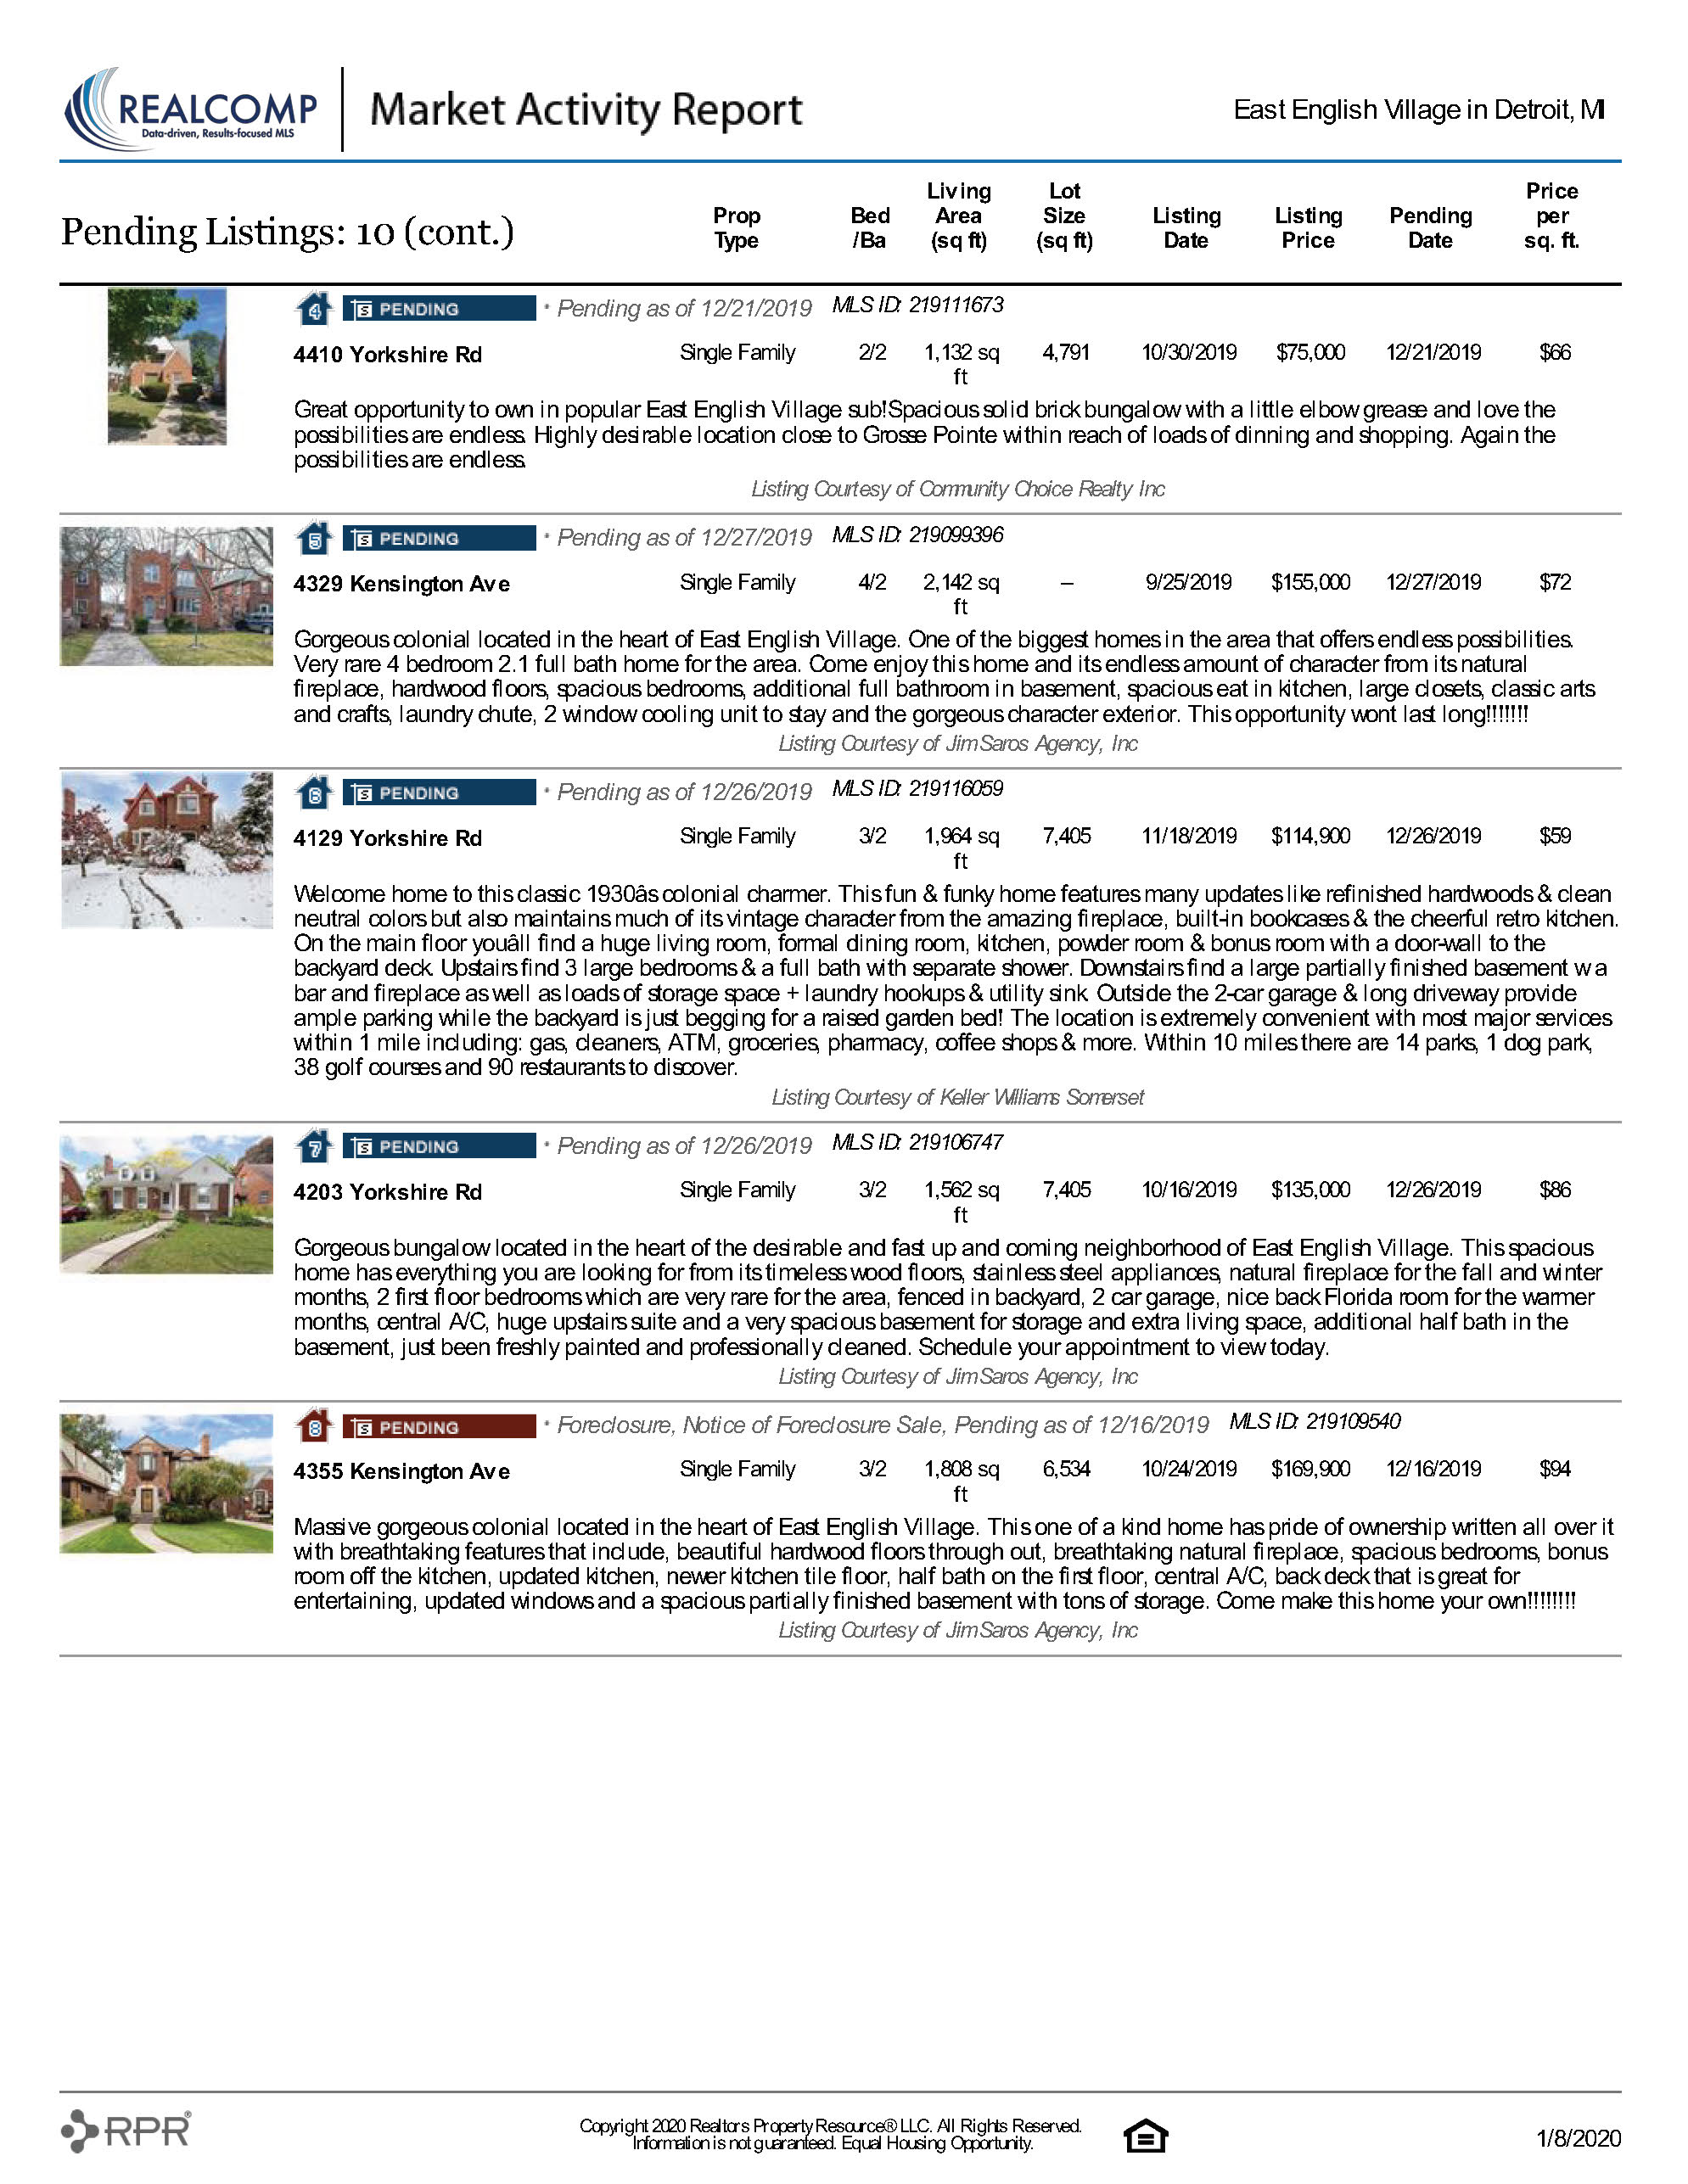 Market-Activity-Report_East-English-Village-in-Detroit-MI_2020-01-08-18-38-24_Page_13.jpg